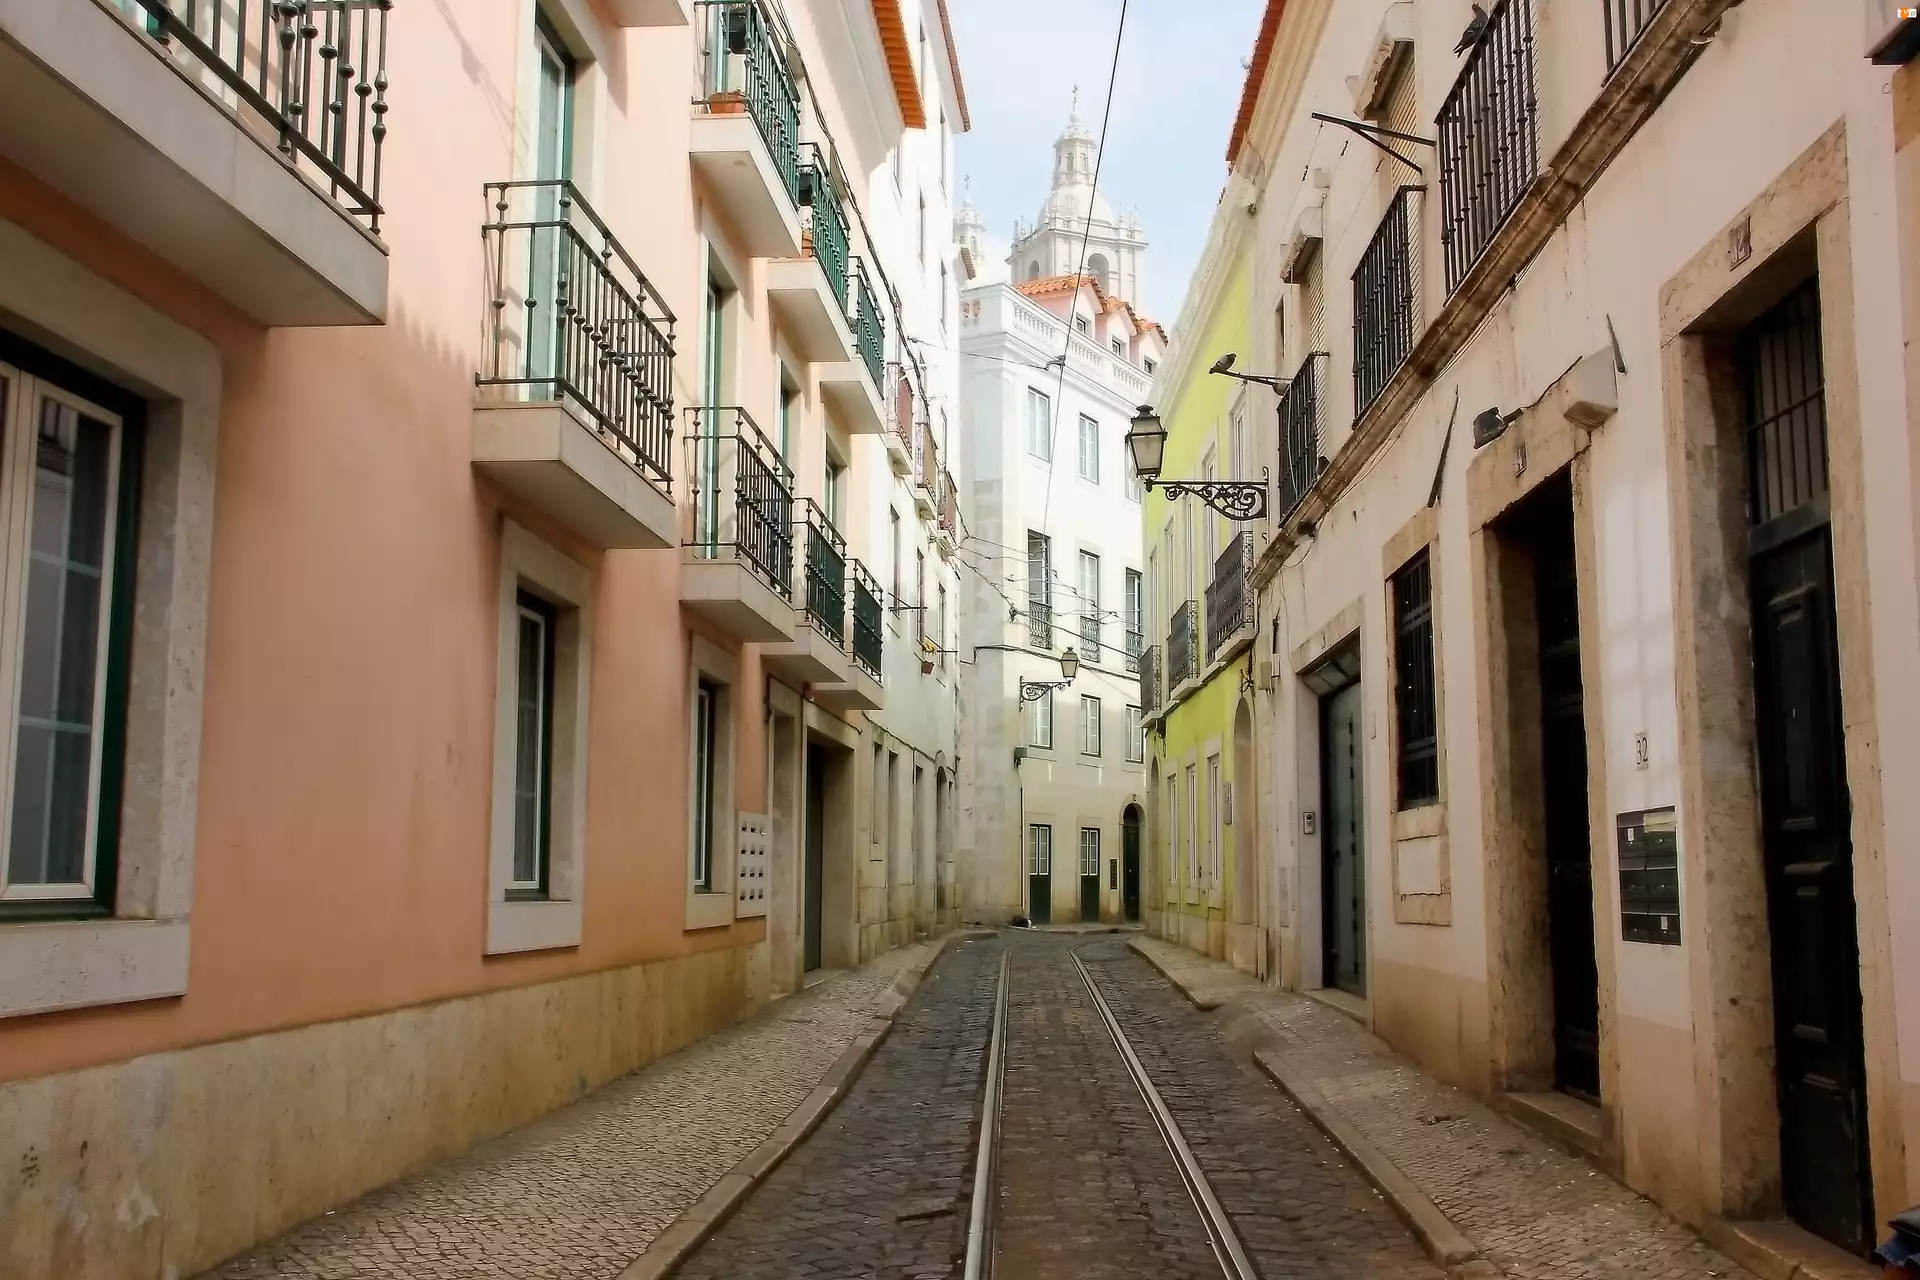 Uliczka, Lizbona, Portugalia